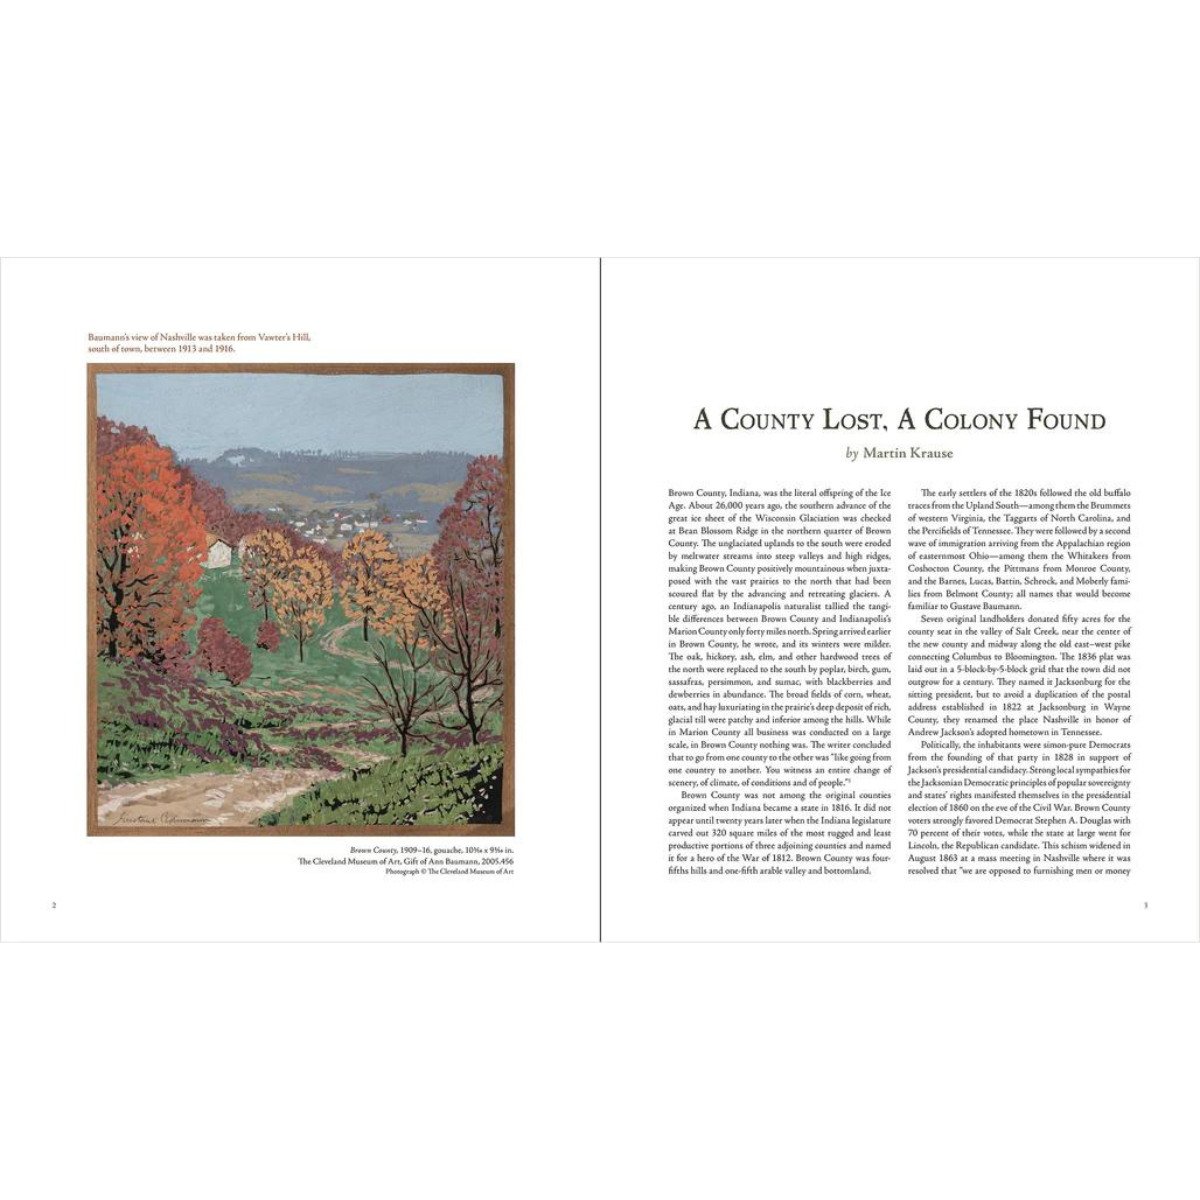 Gustave Baumann:  Views of Brown County